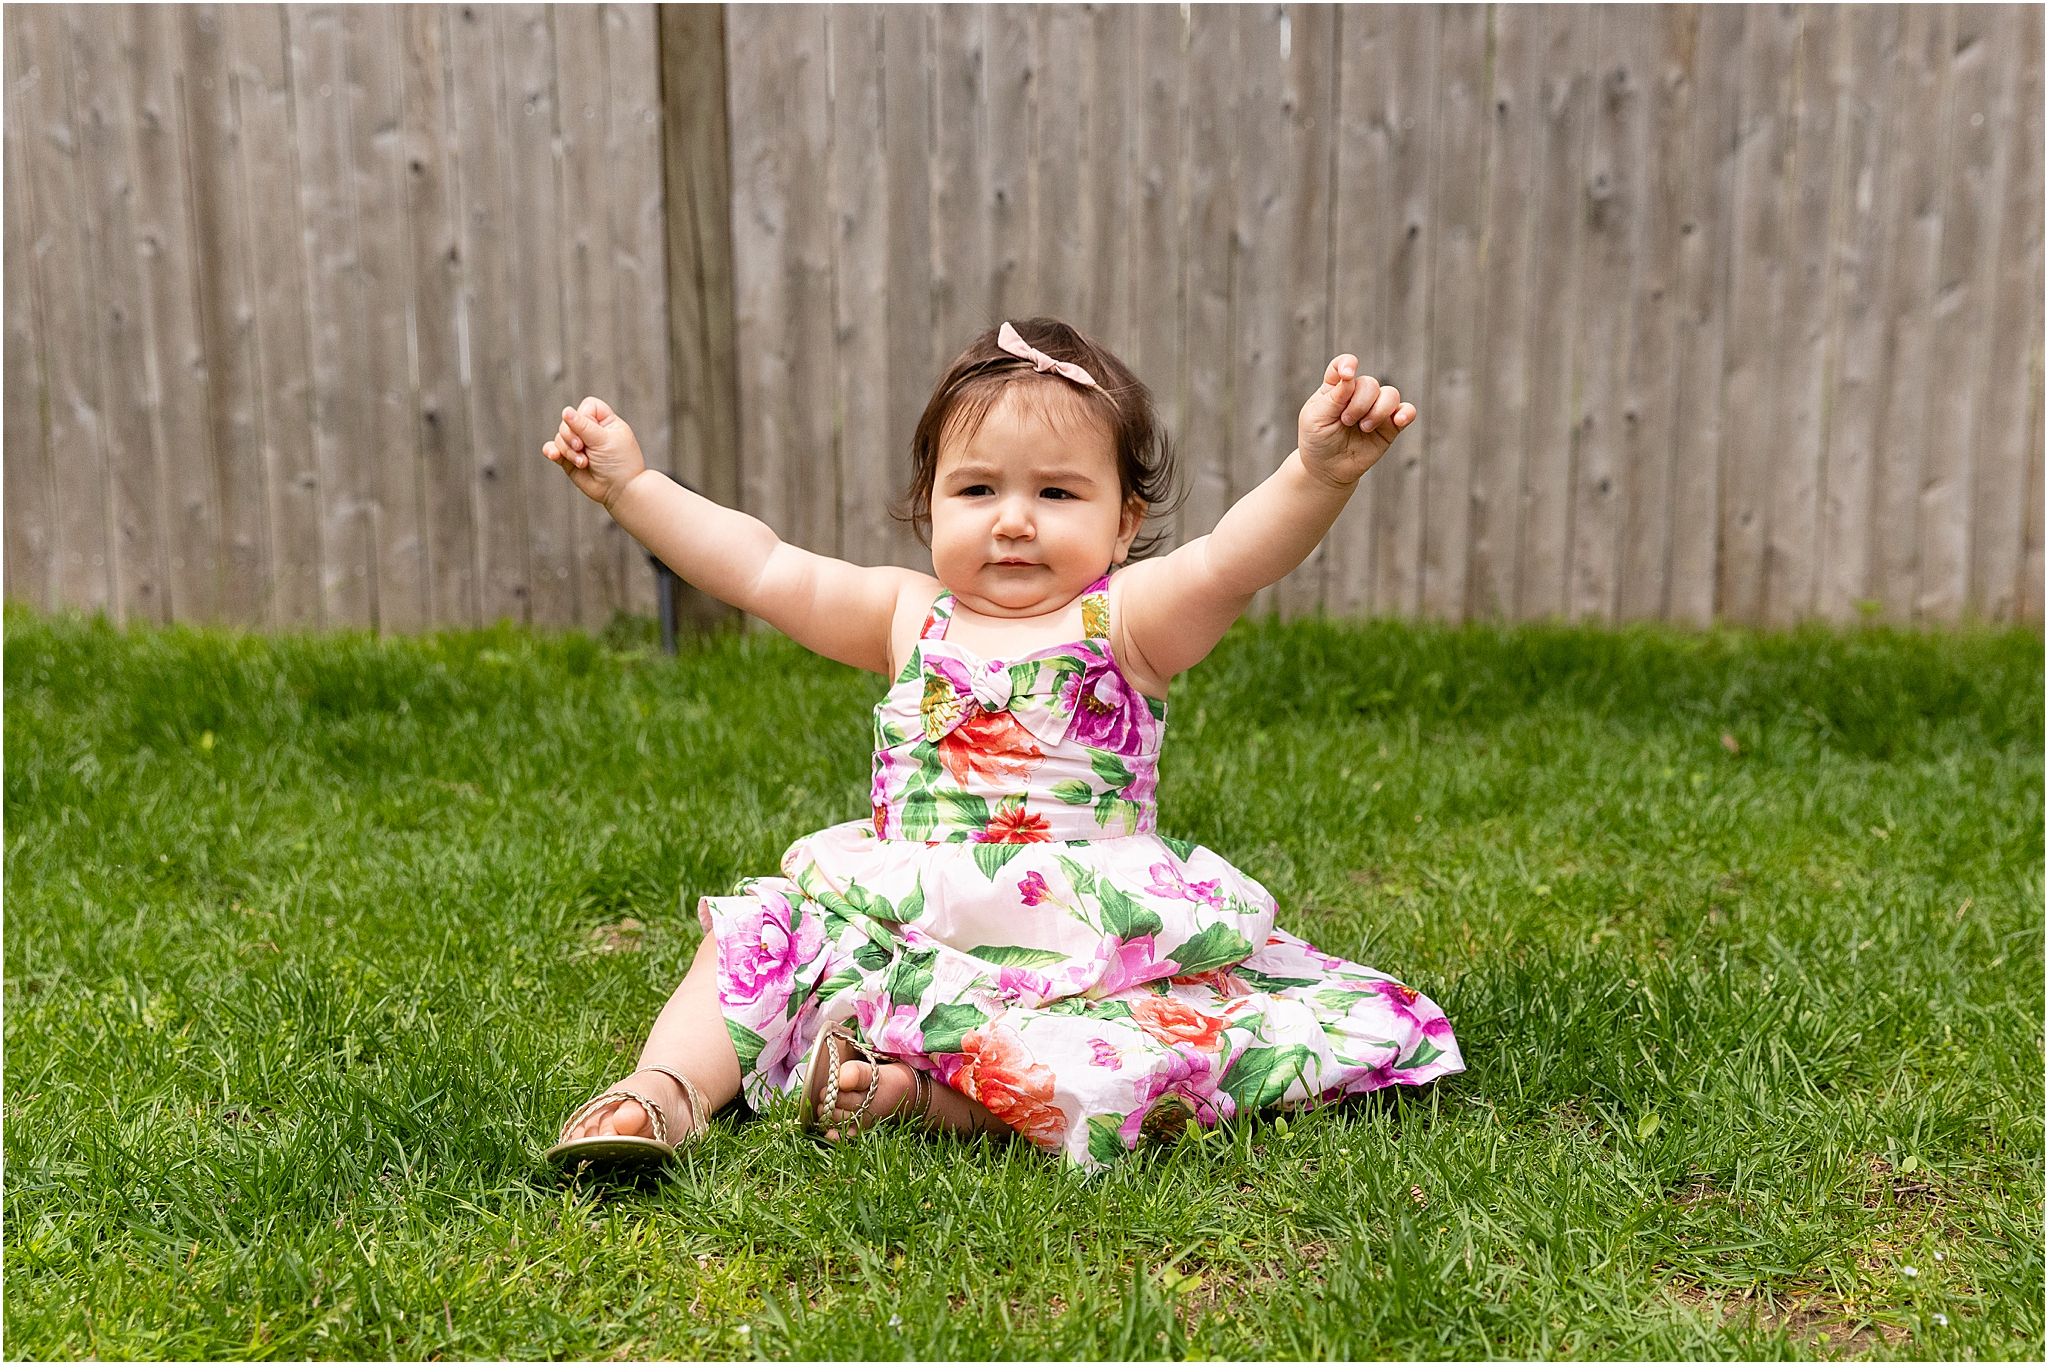 celebrating one year old by boston photographer cara soulia